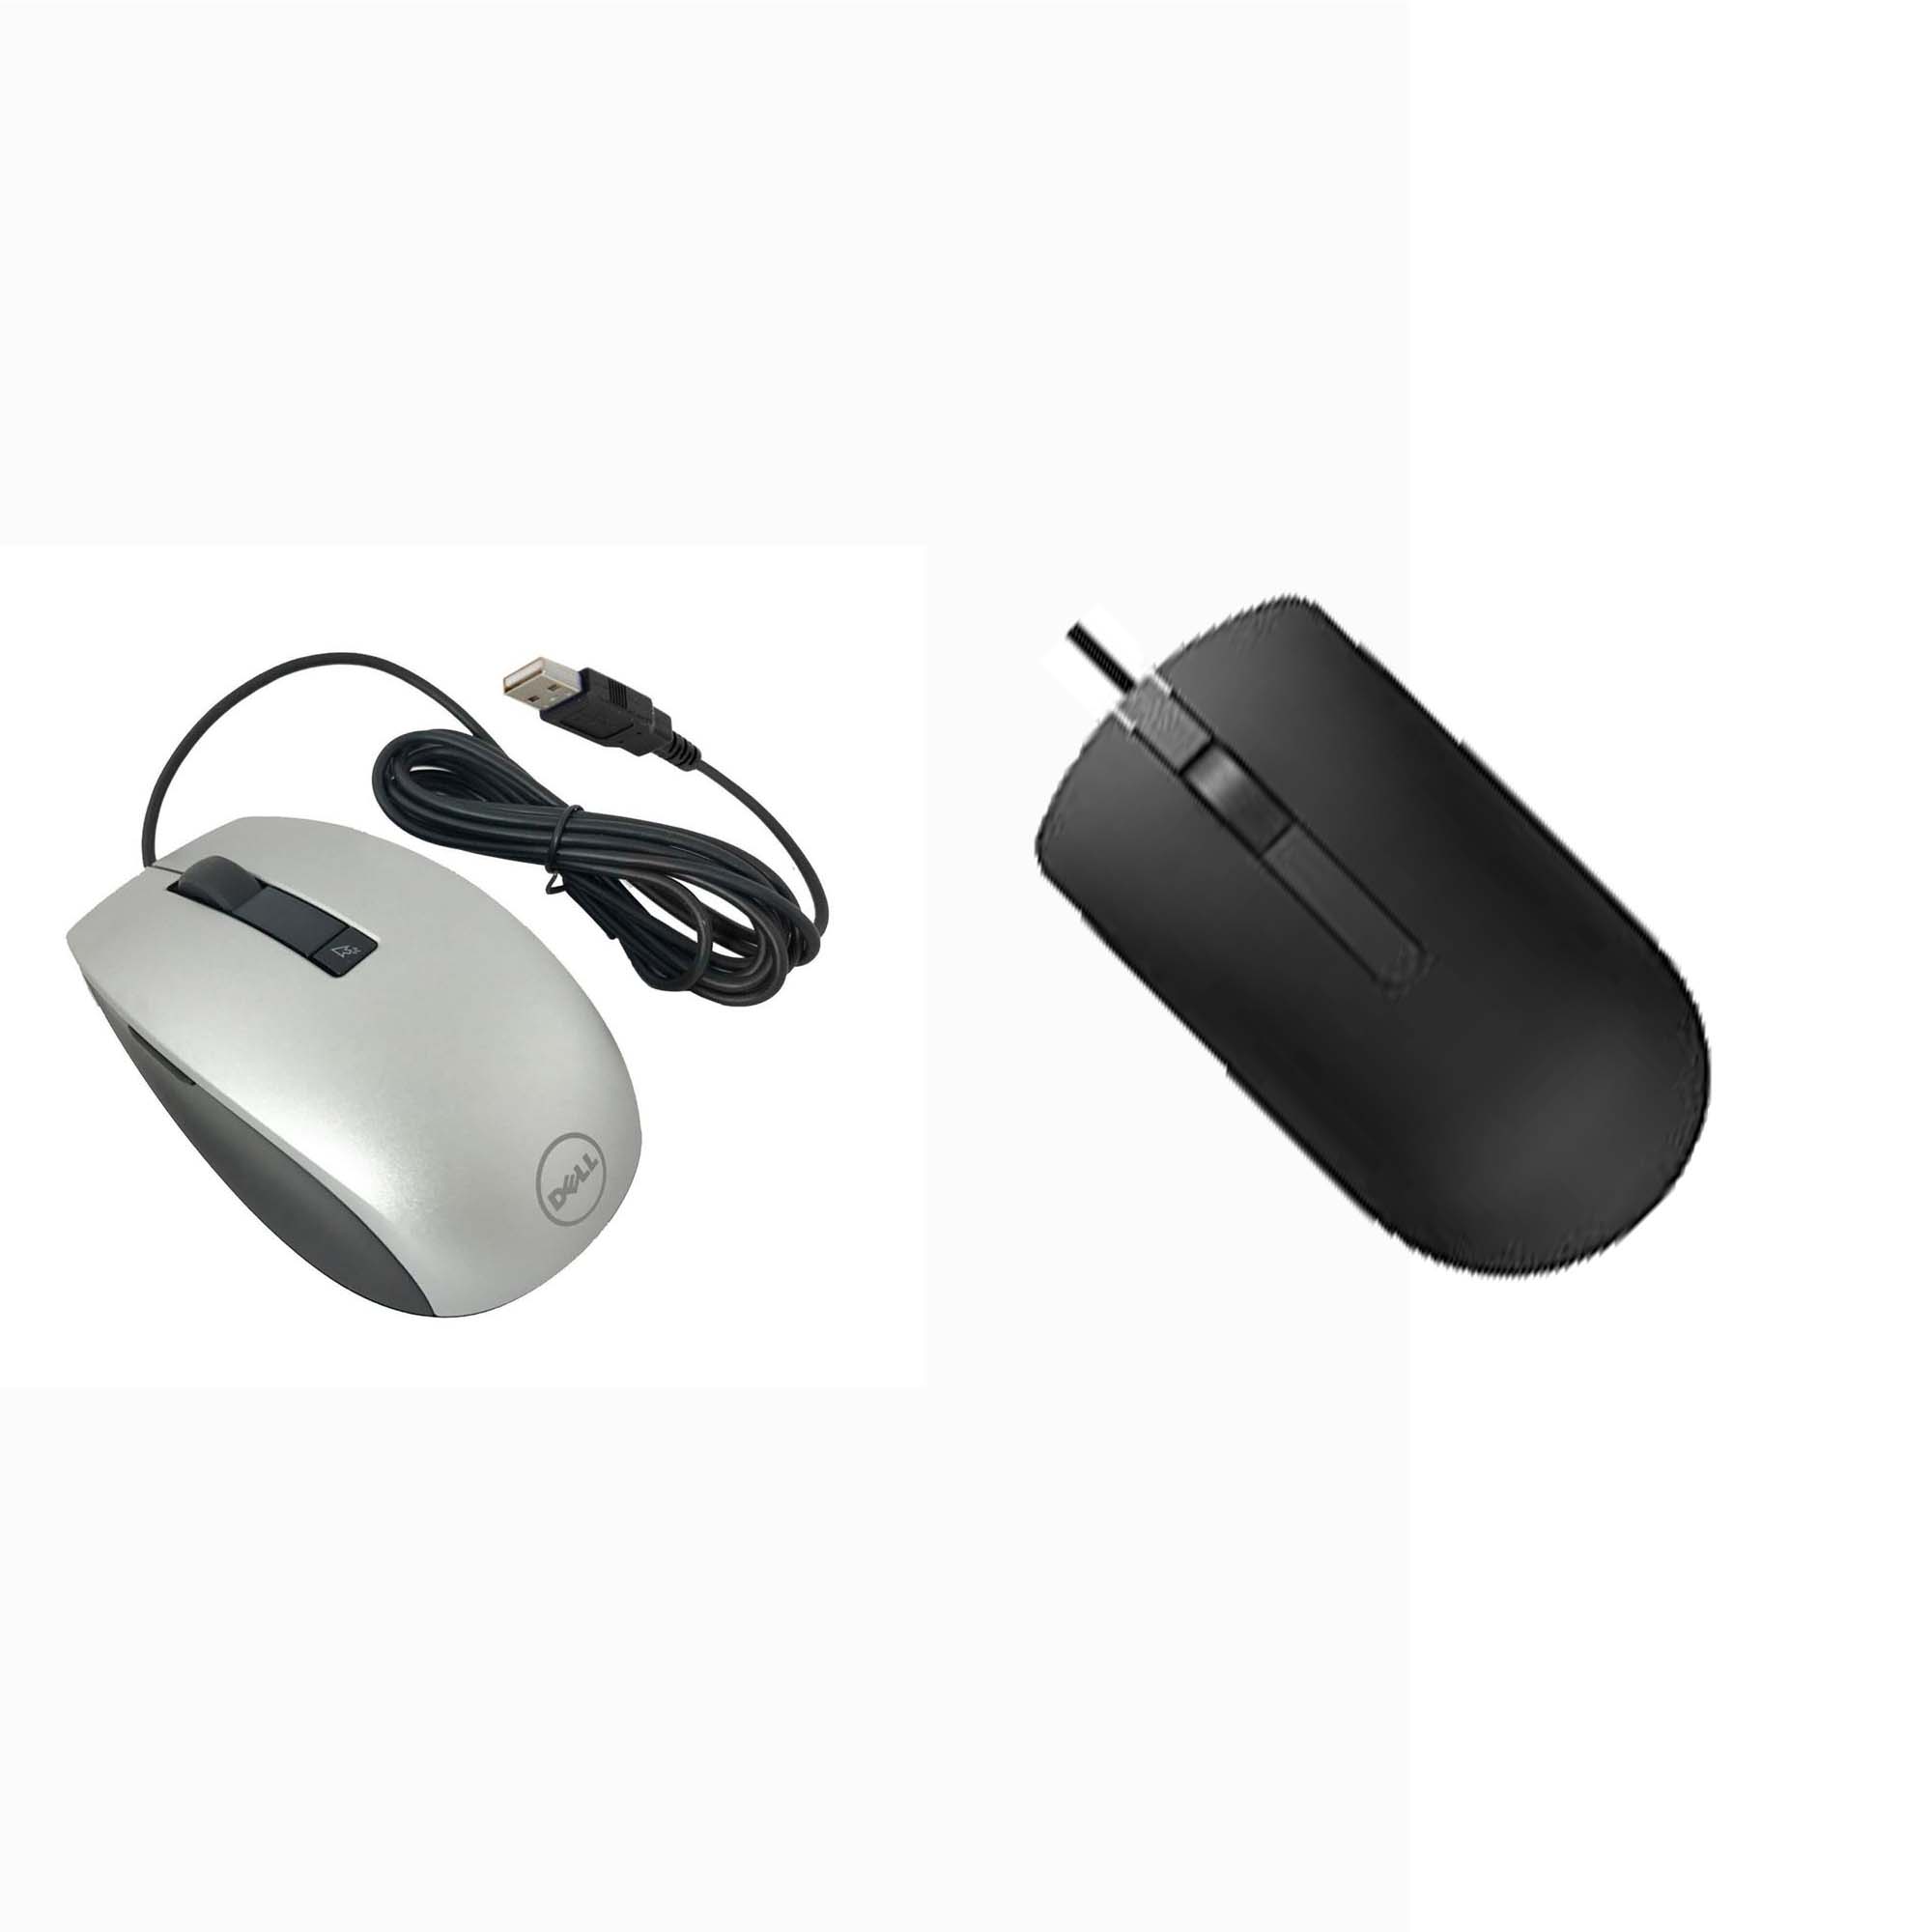 ORIGINAL MOUSE BRAND OEM USB ماوس اورجينال ماركات عالميه, Mouse